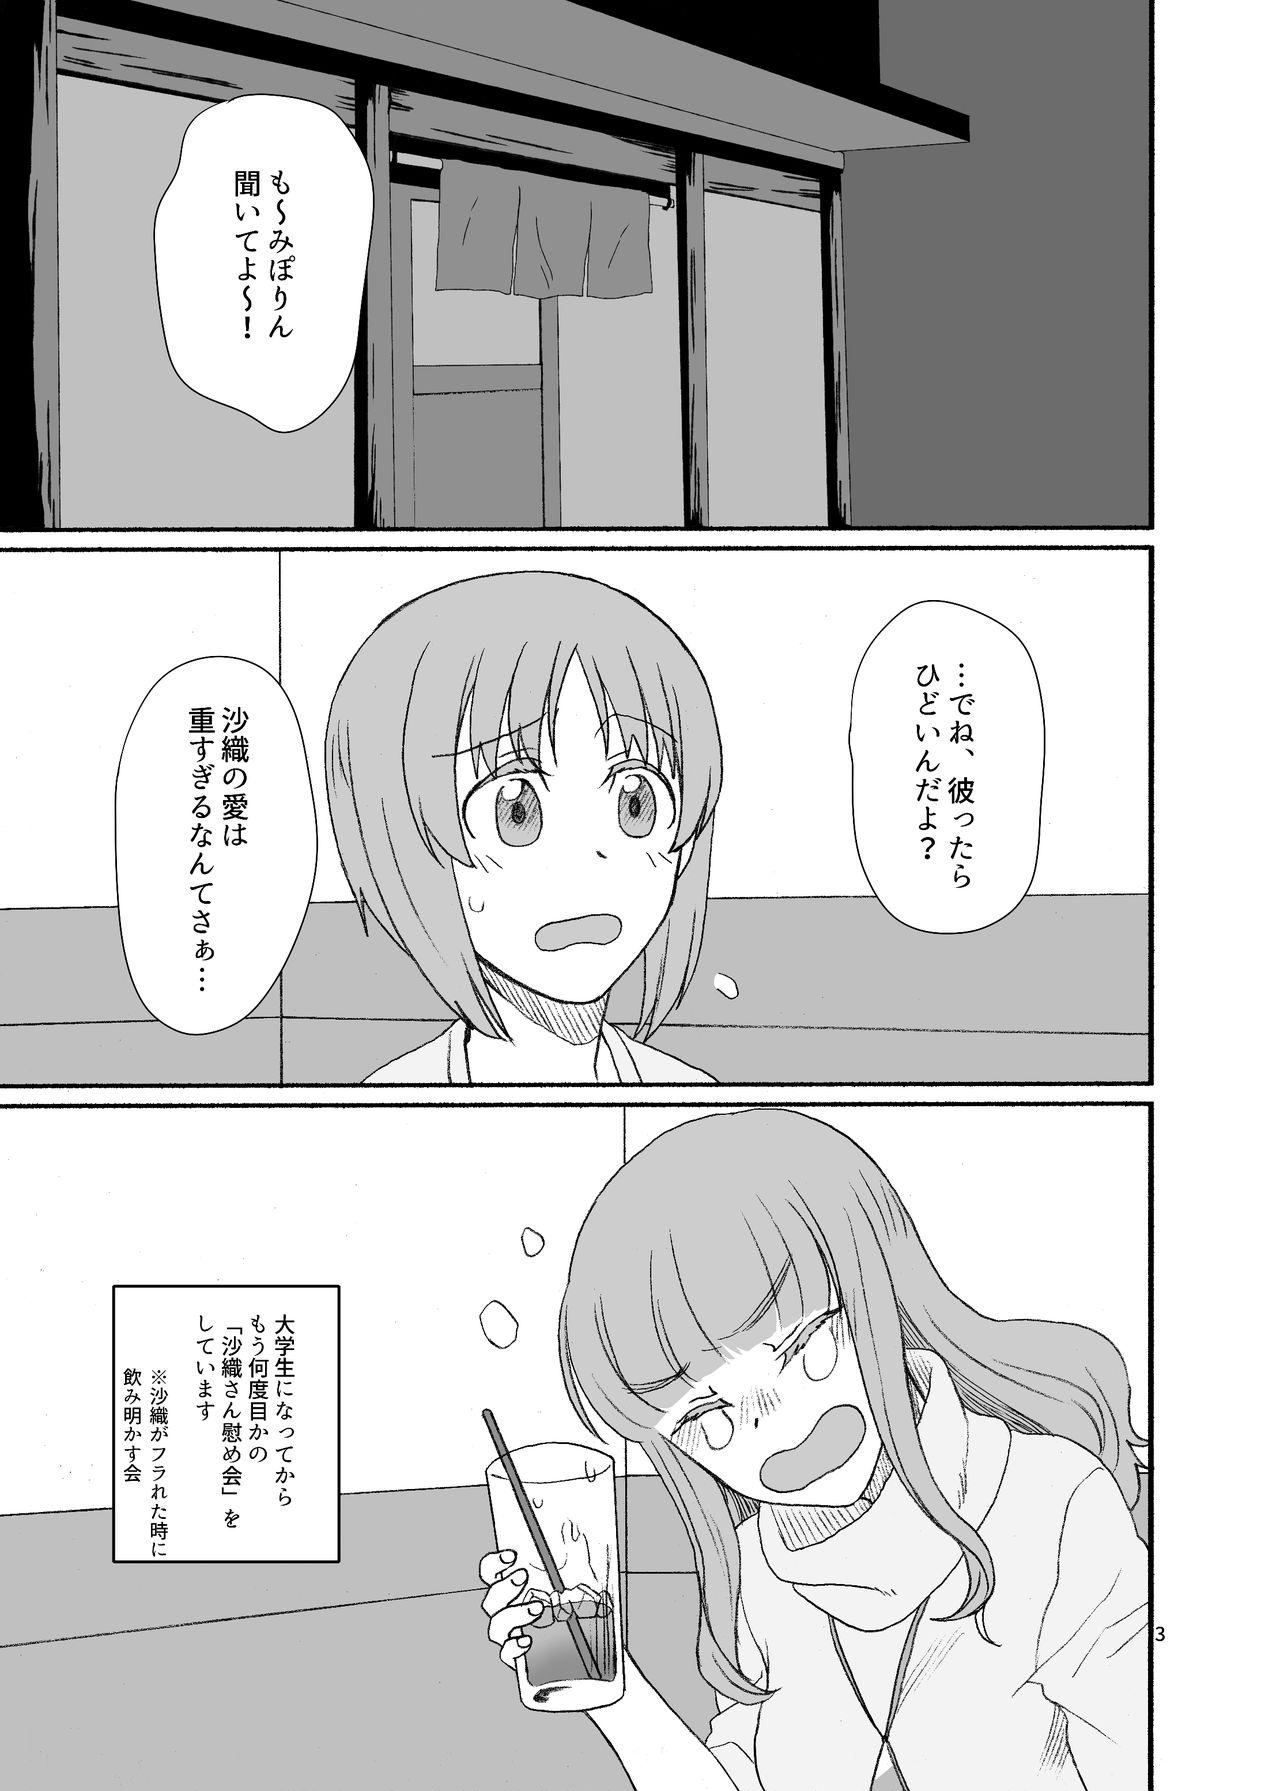 Hot Blow Jobs Saori-san, Tsukiatte Kudasai! - Girls und panzer Long - Page 2